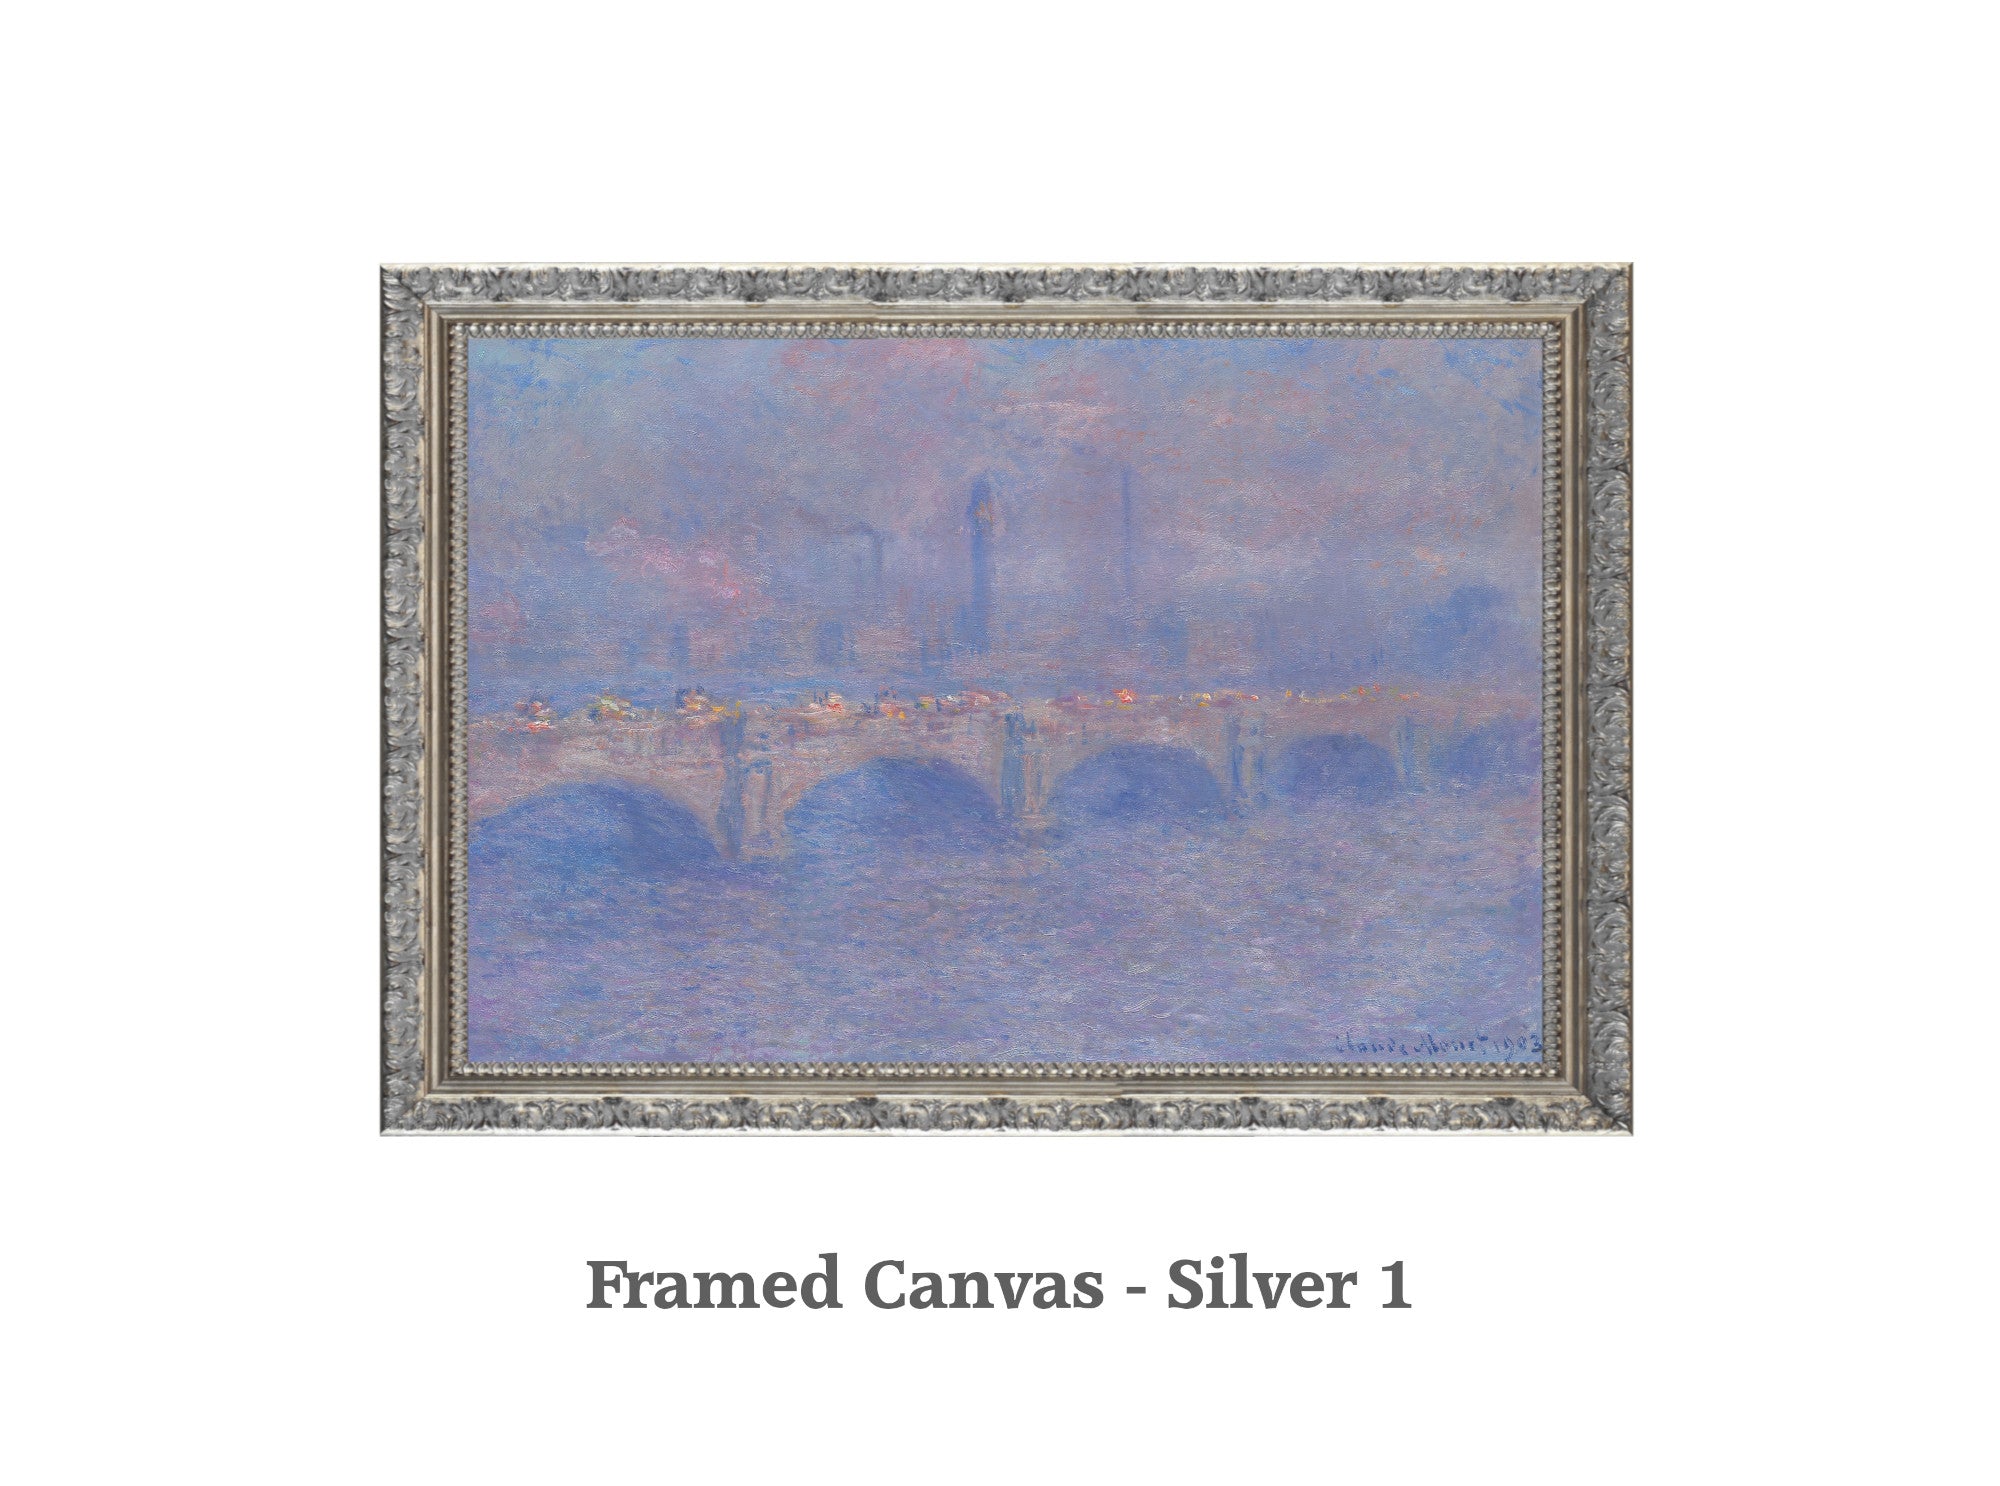 Waterloo Bridge, Sunlight Effect, Claude Monet, Gallery Quality Canvas Reproduction